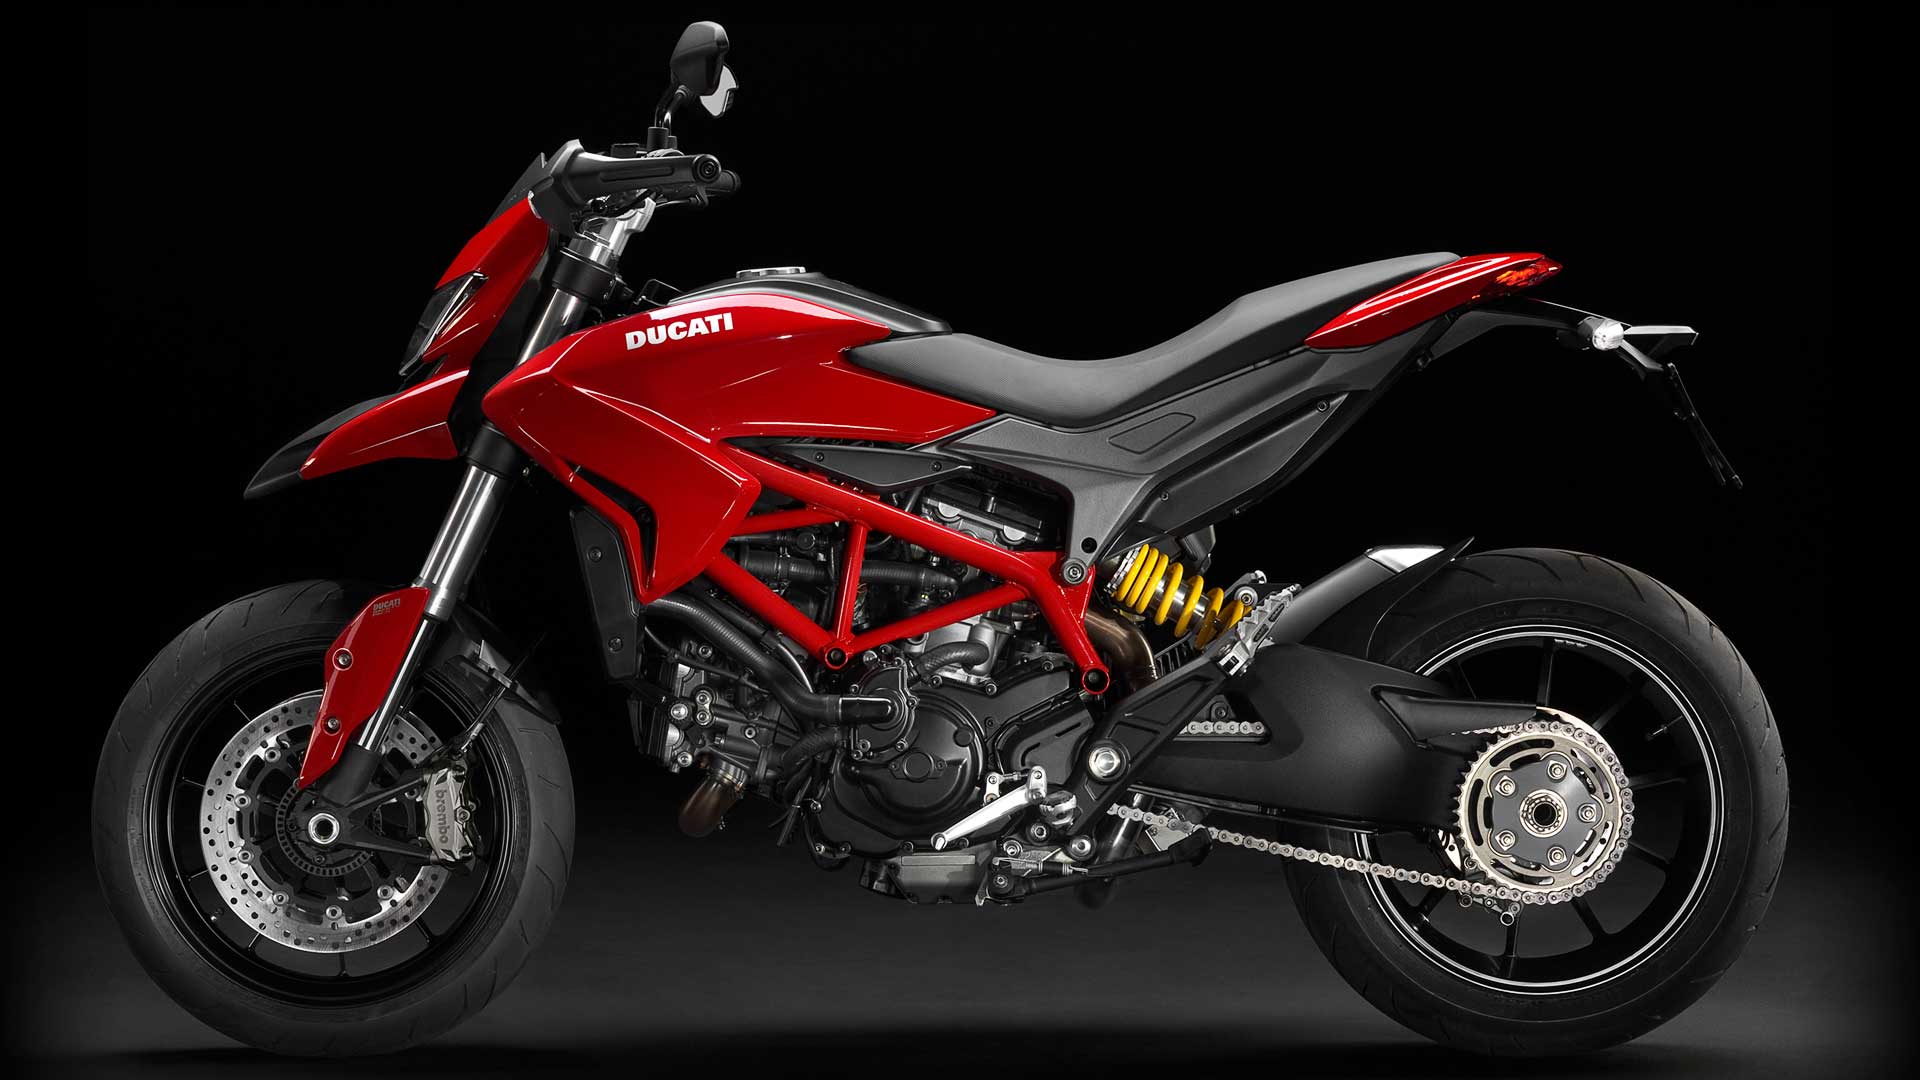 2014 Ducati Hypermotard 821 side view